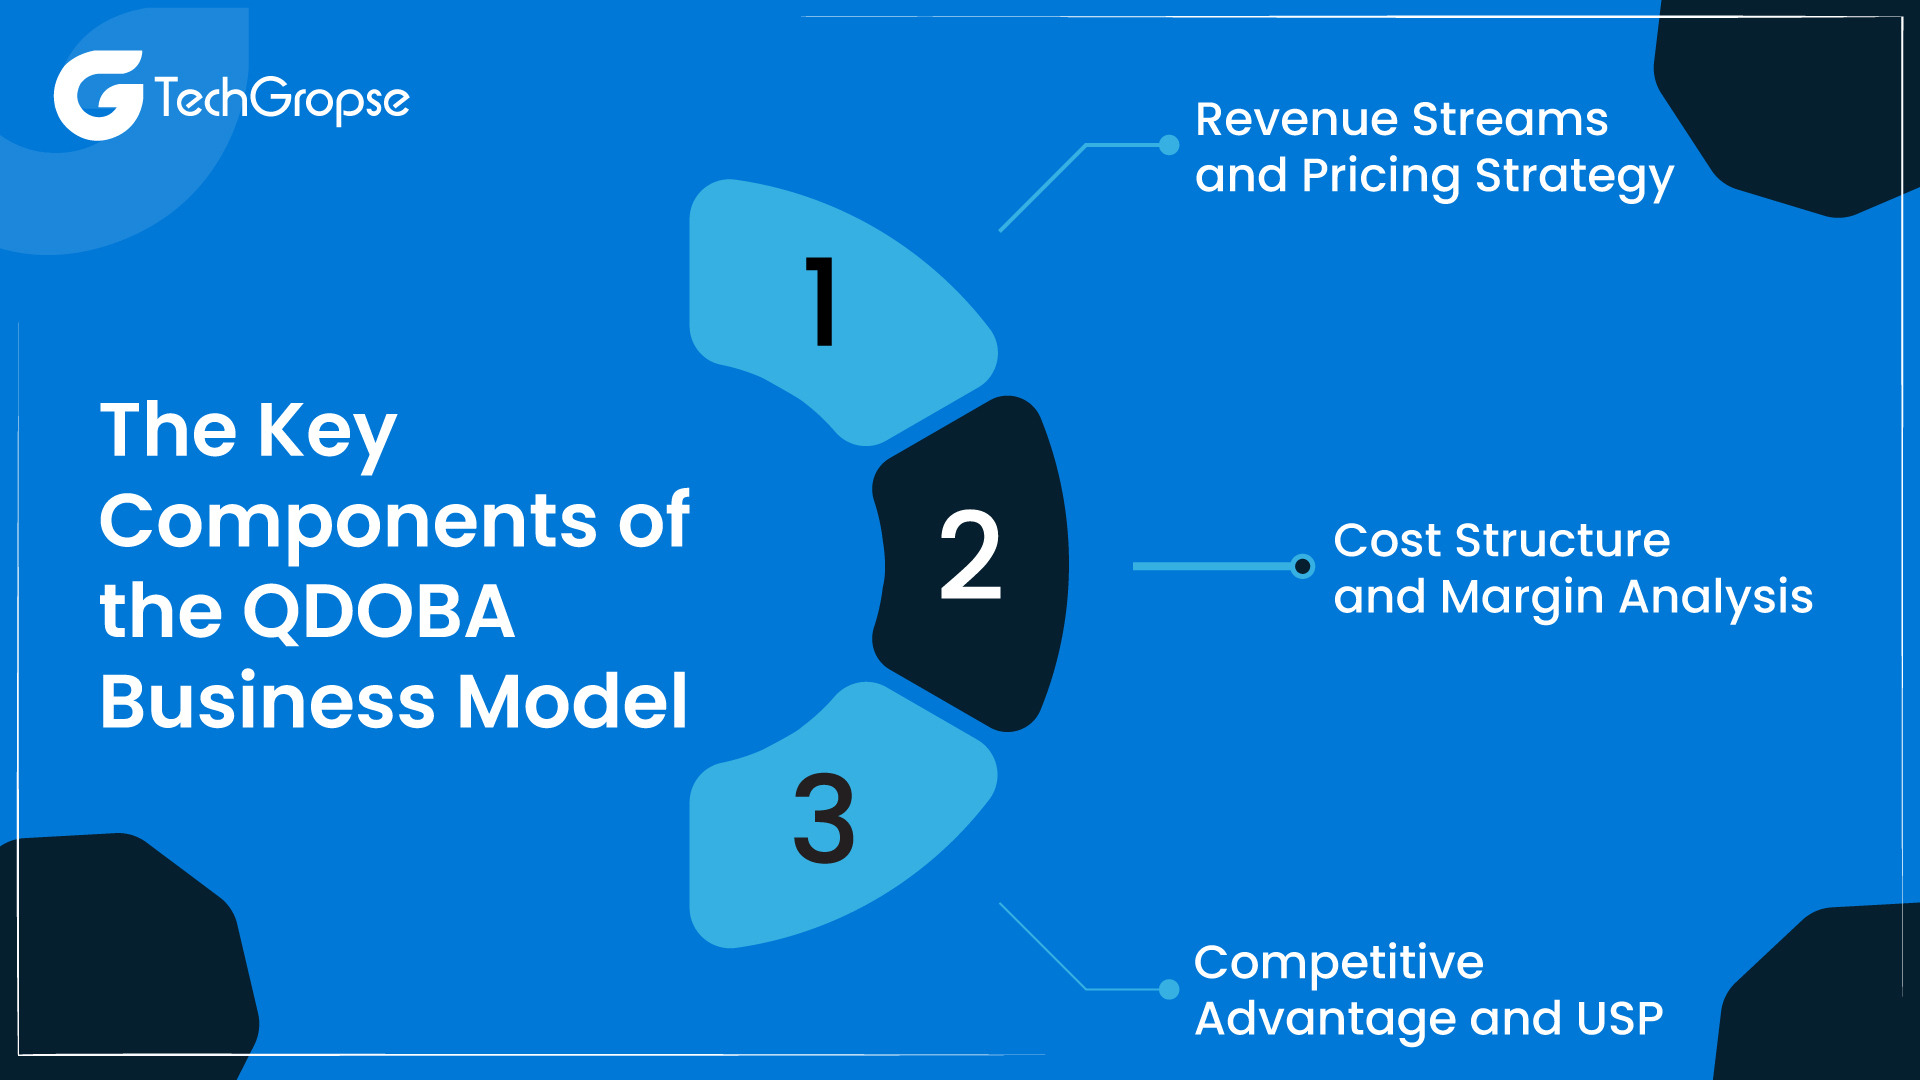 The Key Components of QDOBA Business Model